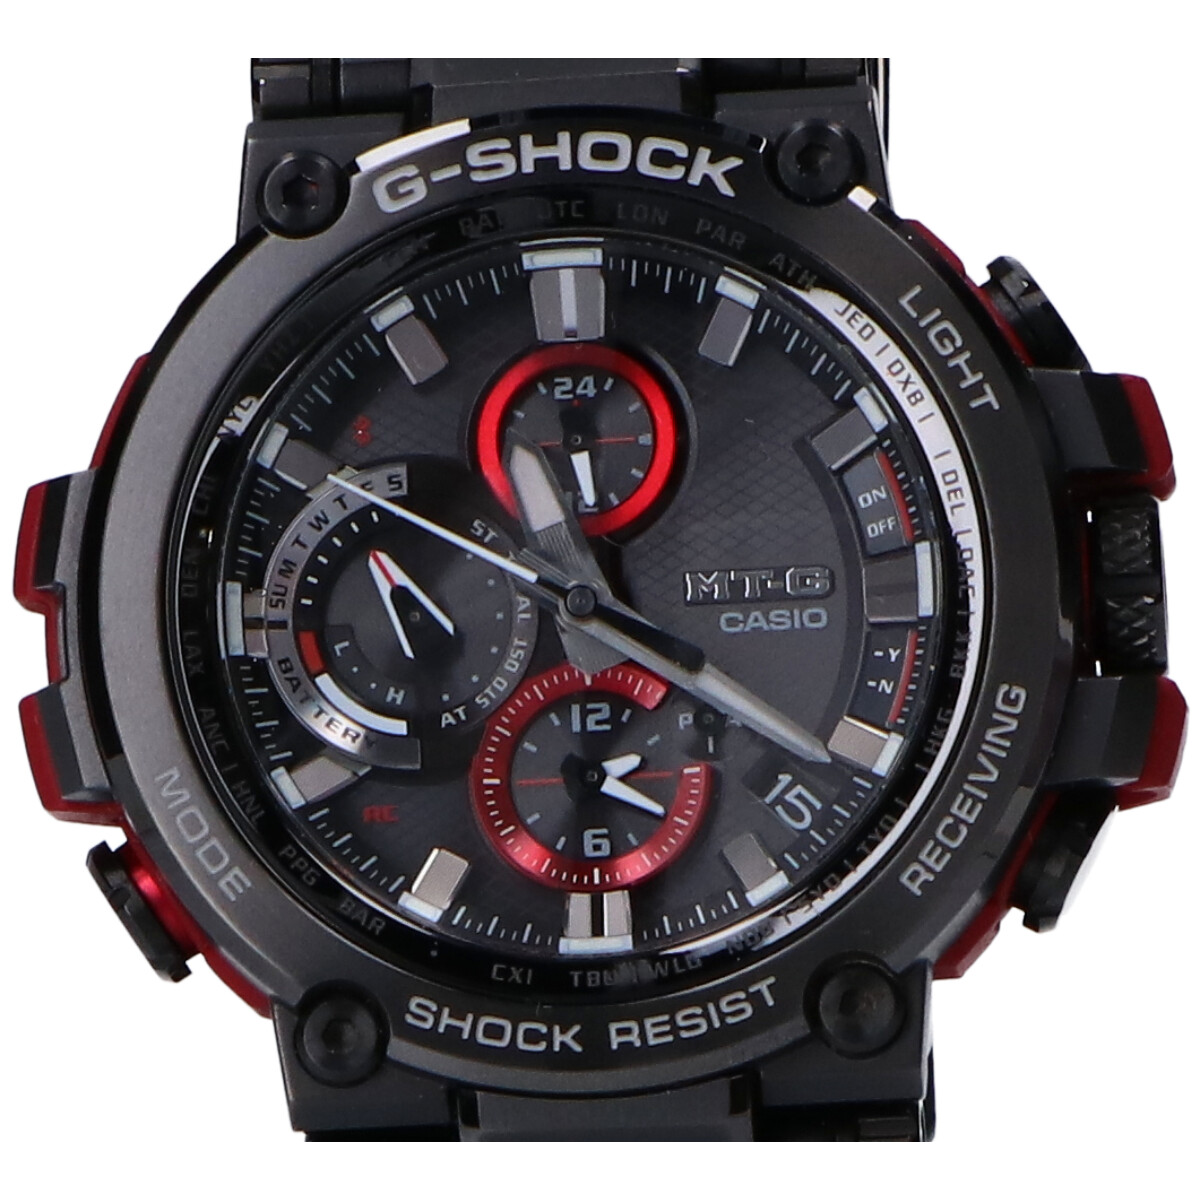 G-SHOCKのMTG-B1000B-1A4JF MT-G Bluetooth搭載 タフソーラー電波 腕時計の買取実績です。